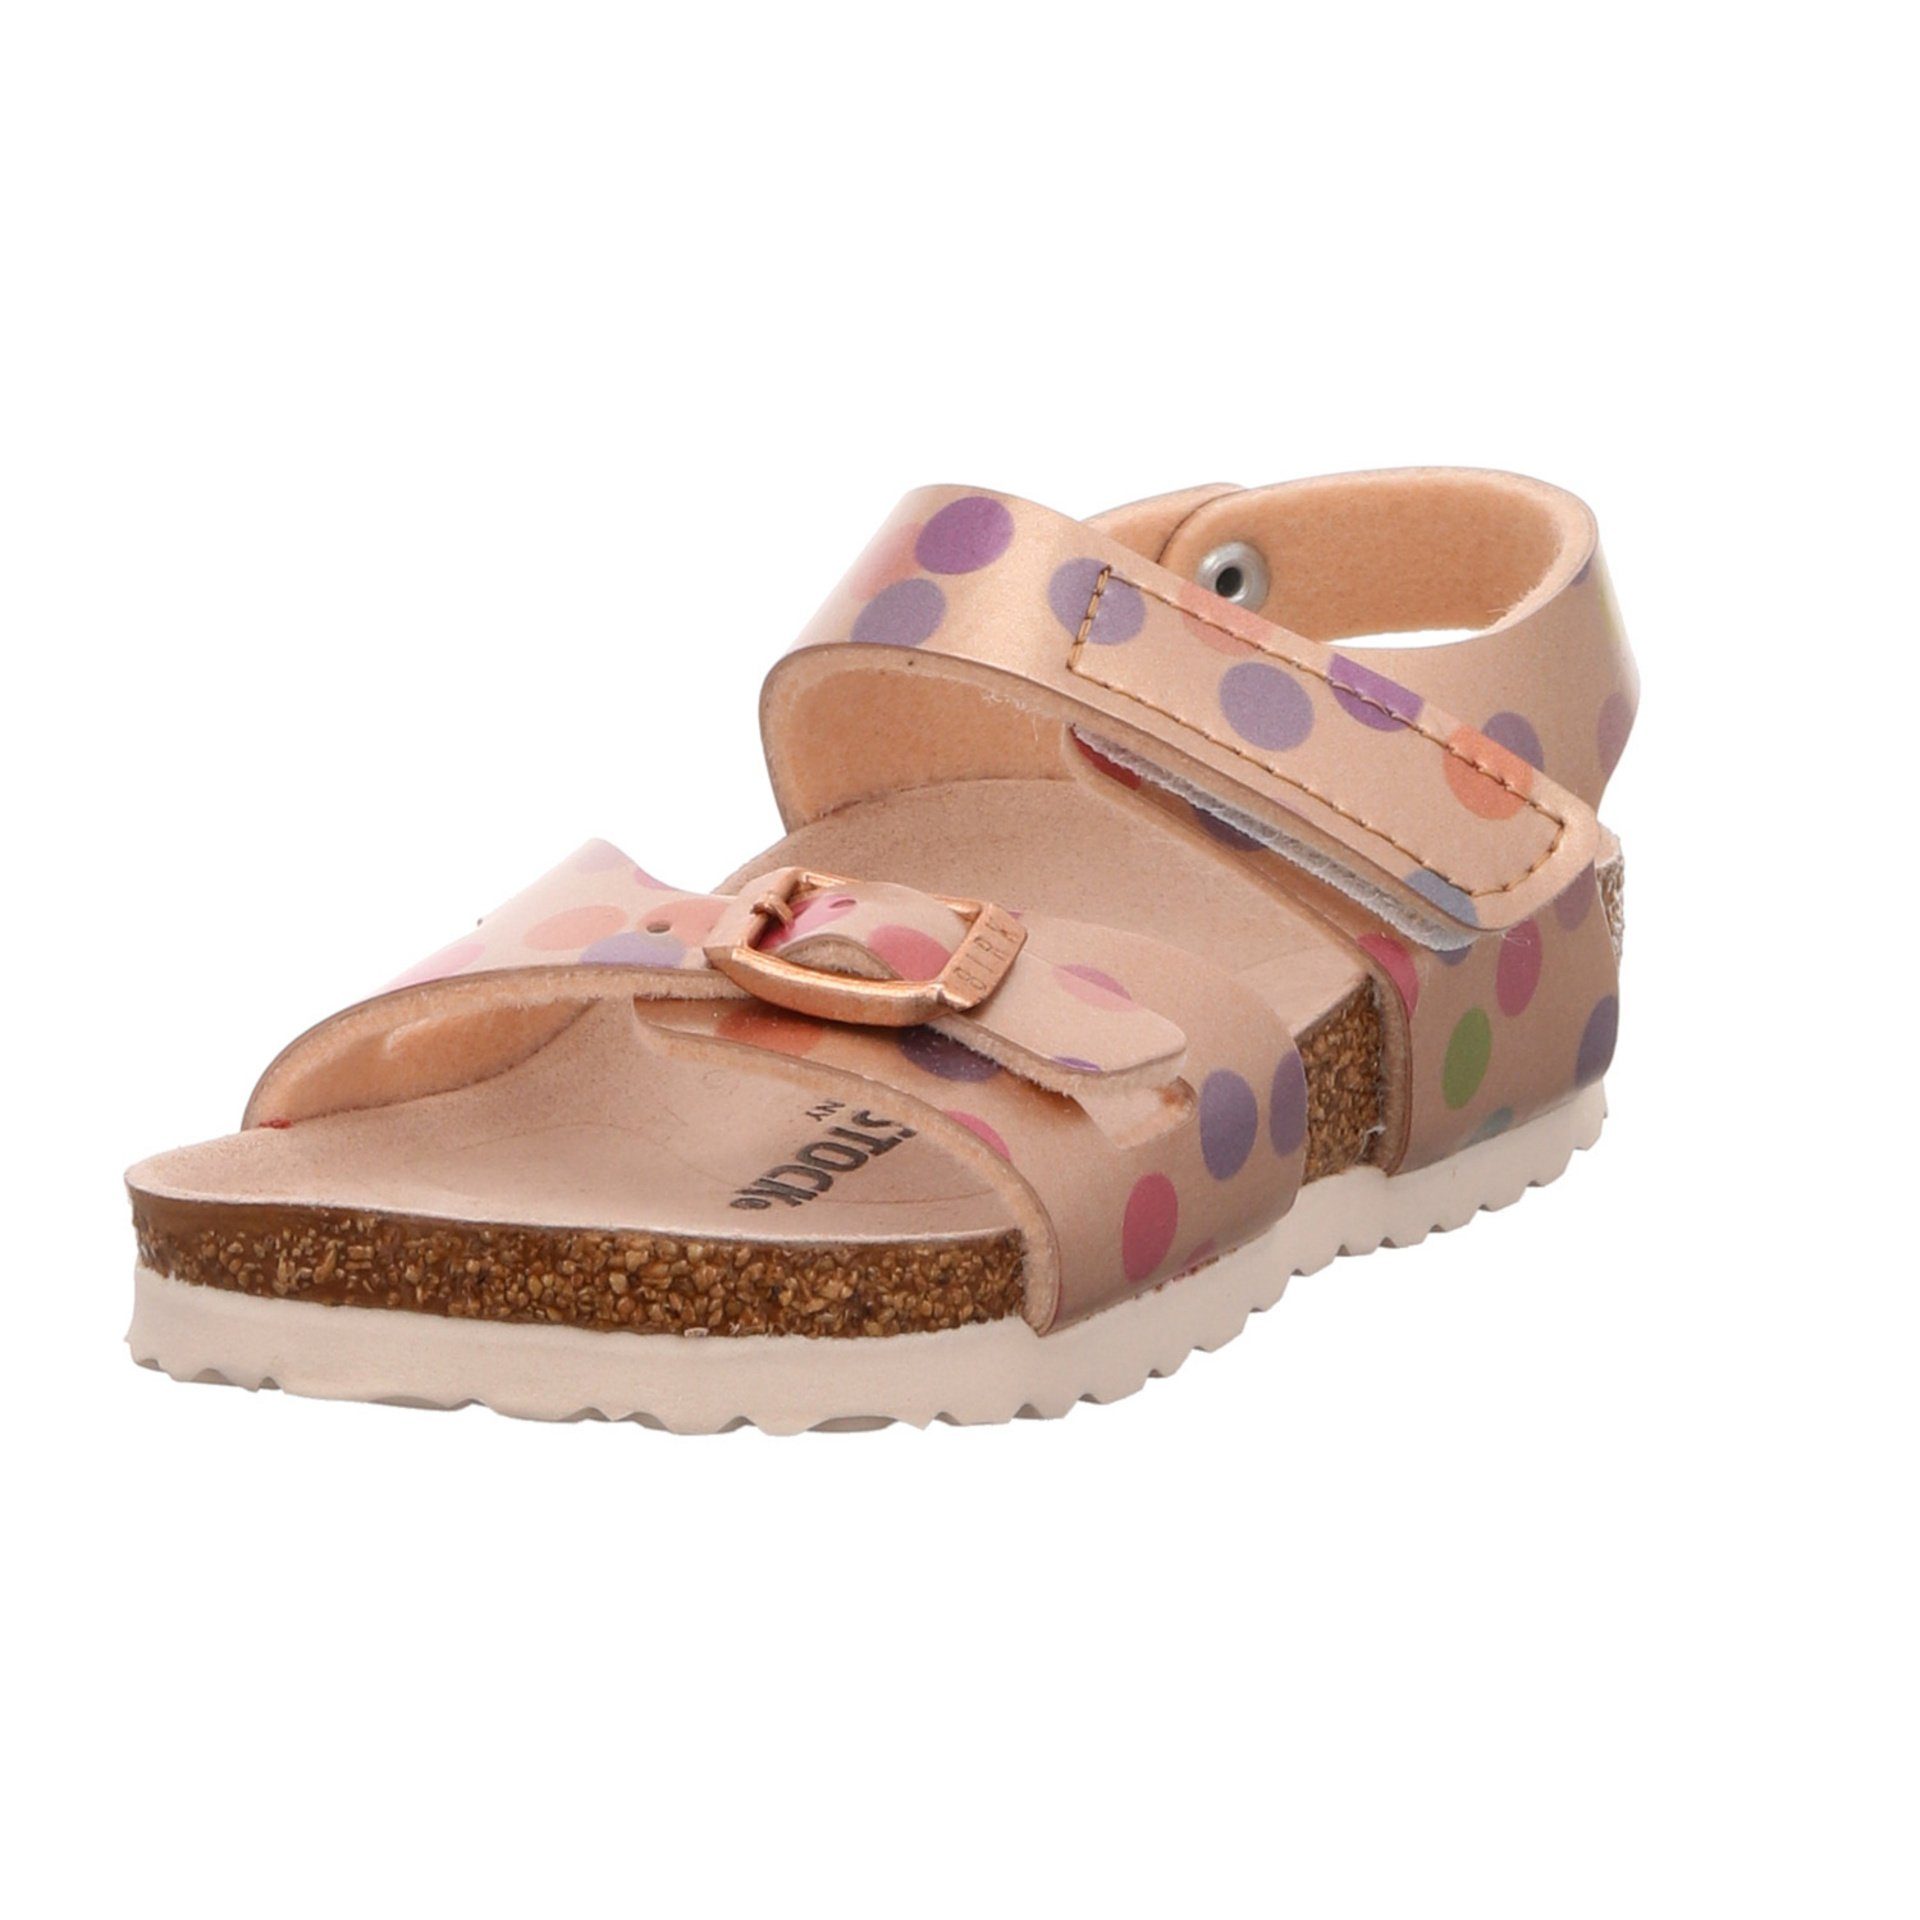 Birkenstock Mädchen Sandalen Schuhe Colorado Kids Sandale Sandale Synthetik gold+silber sonst Ko